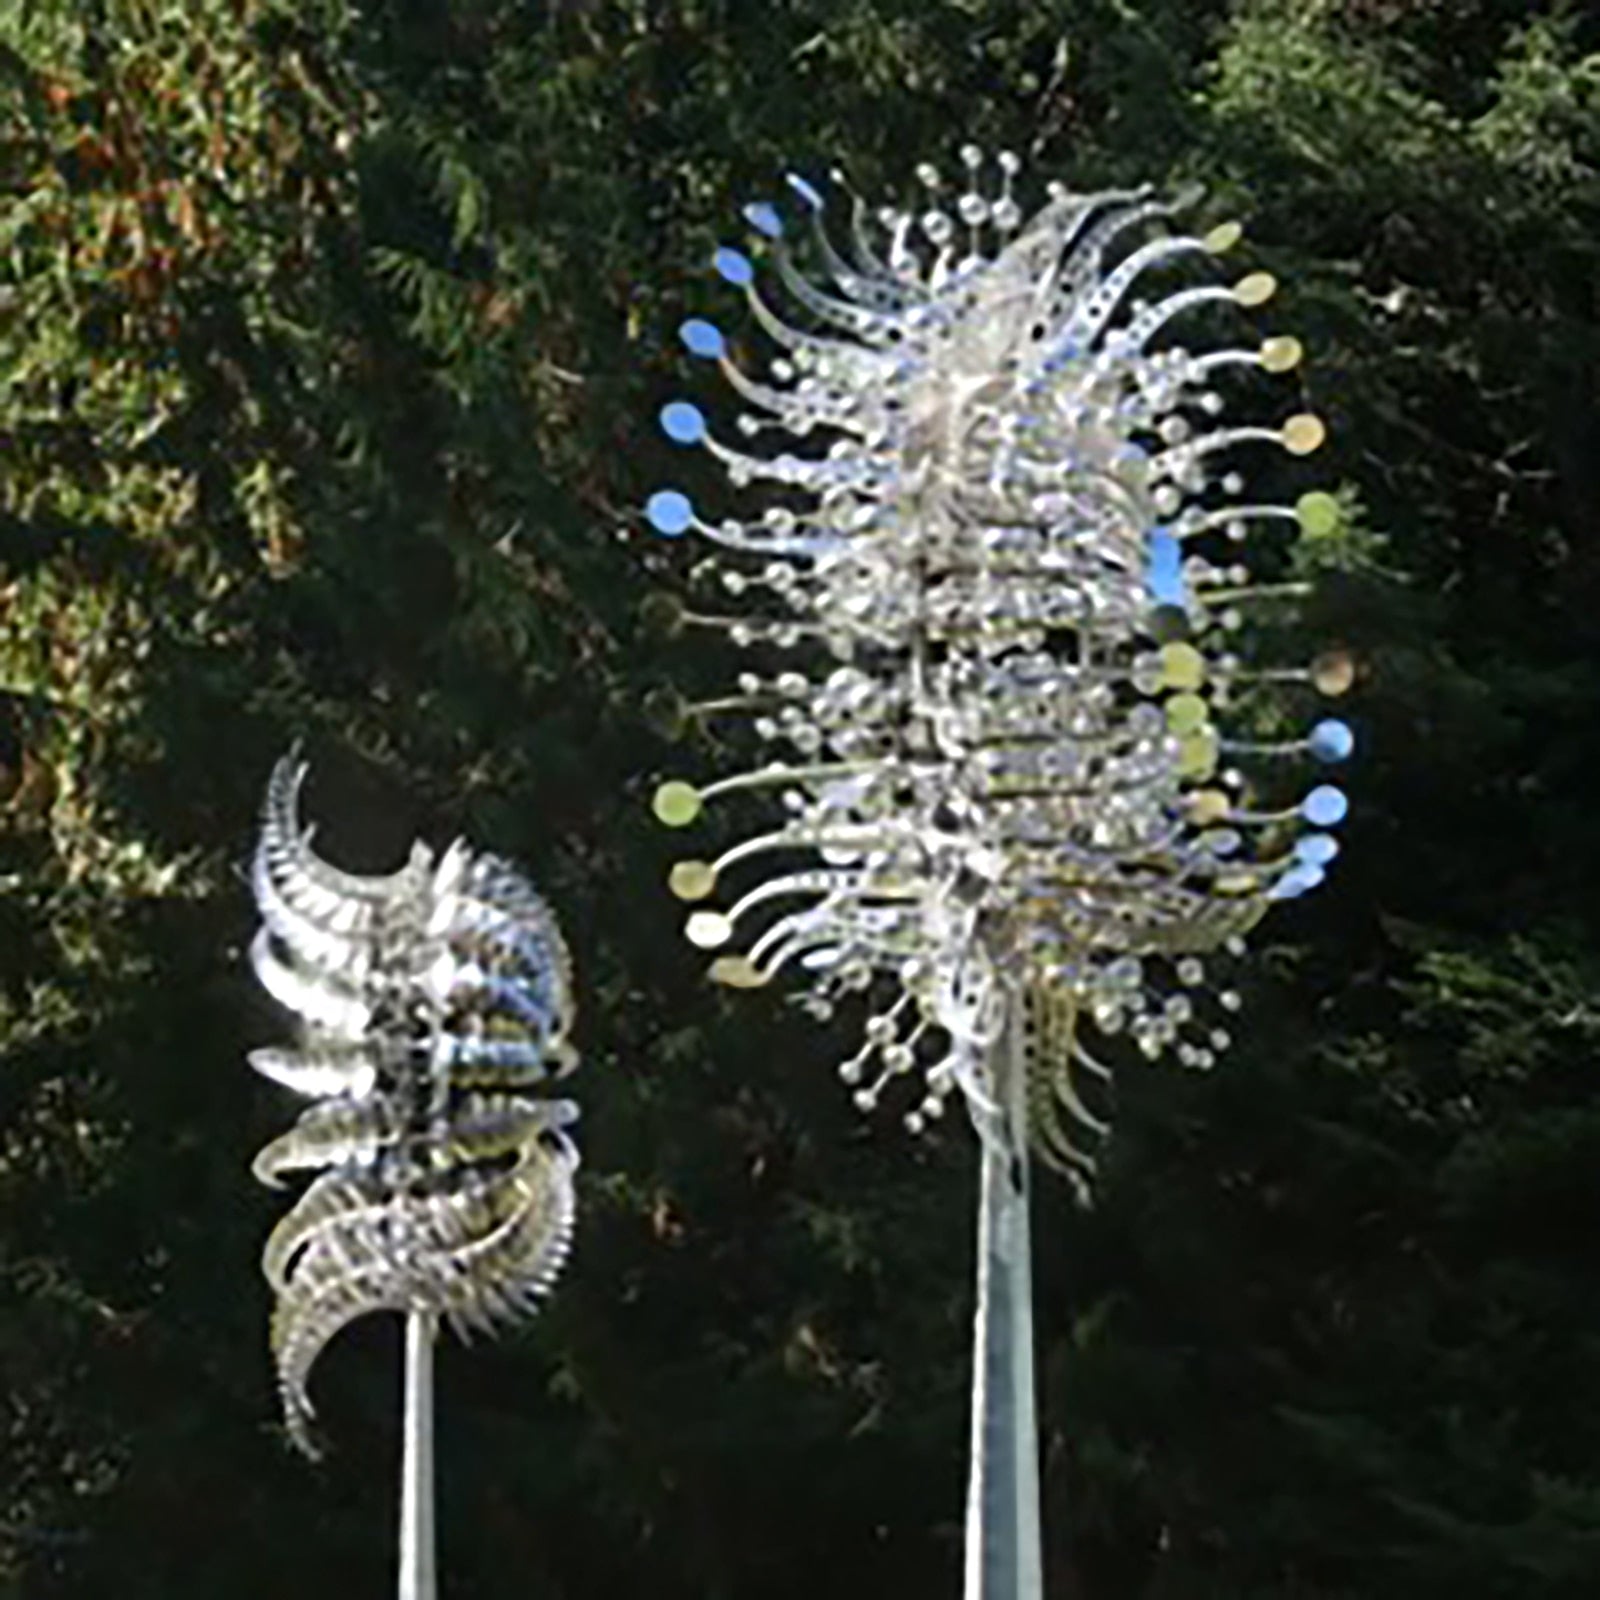 kinetic sculpture & Magical Metal Windmill